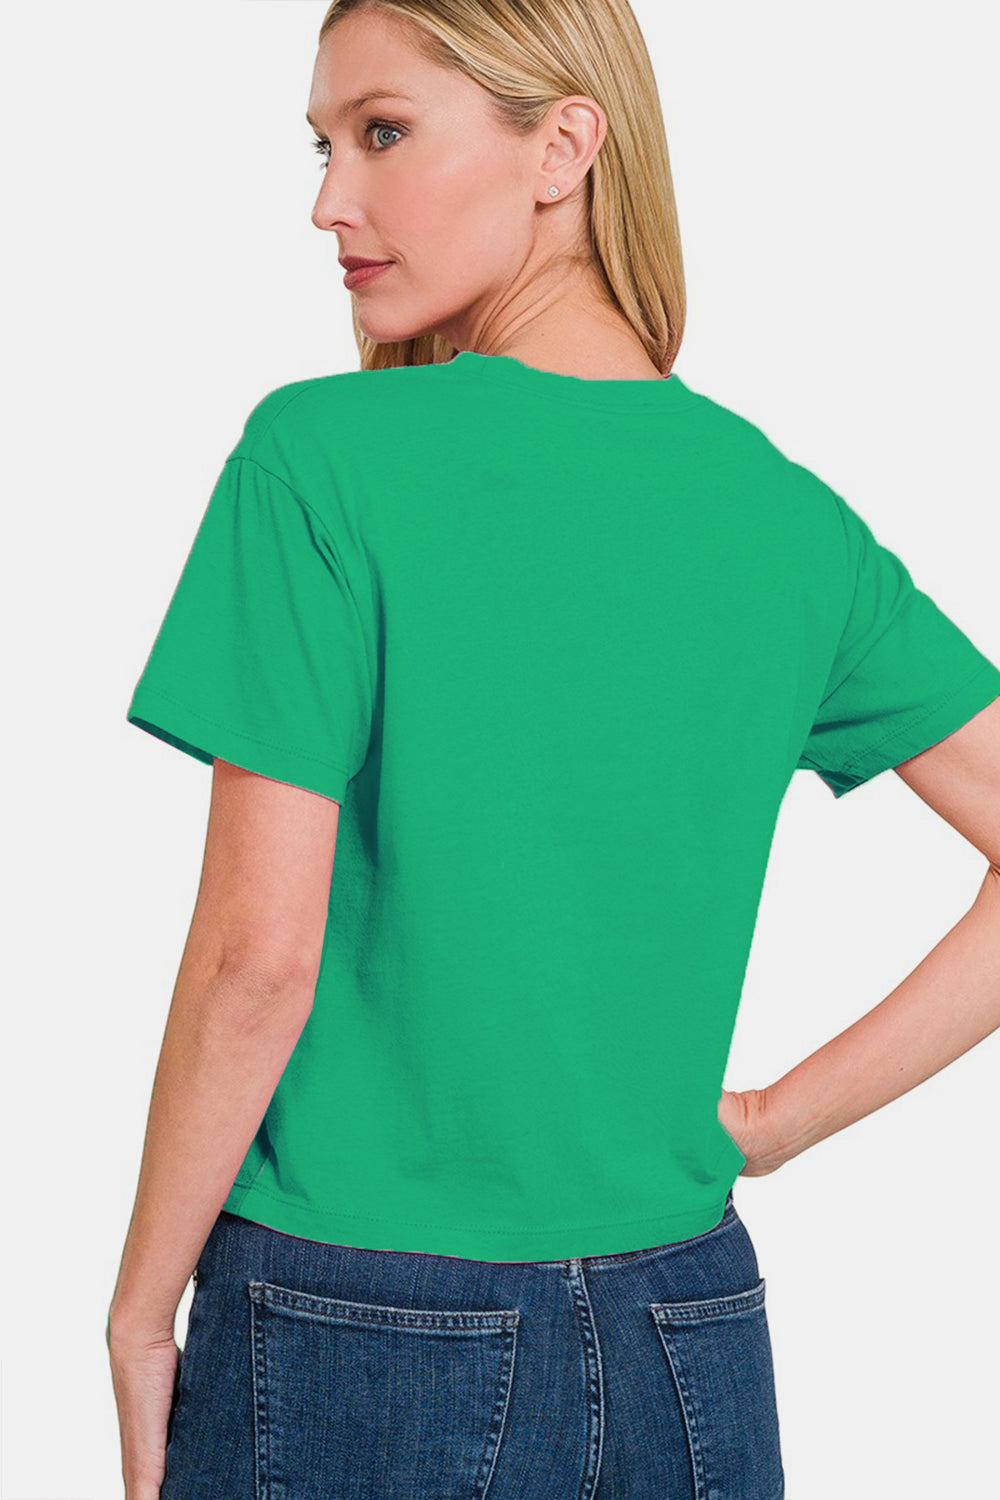 Zenana Round Neck Short Sleeve Cropped T-Shirt - Three Bears Boutique